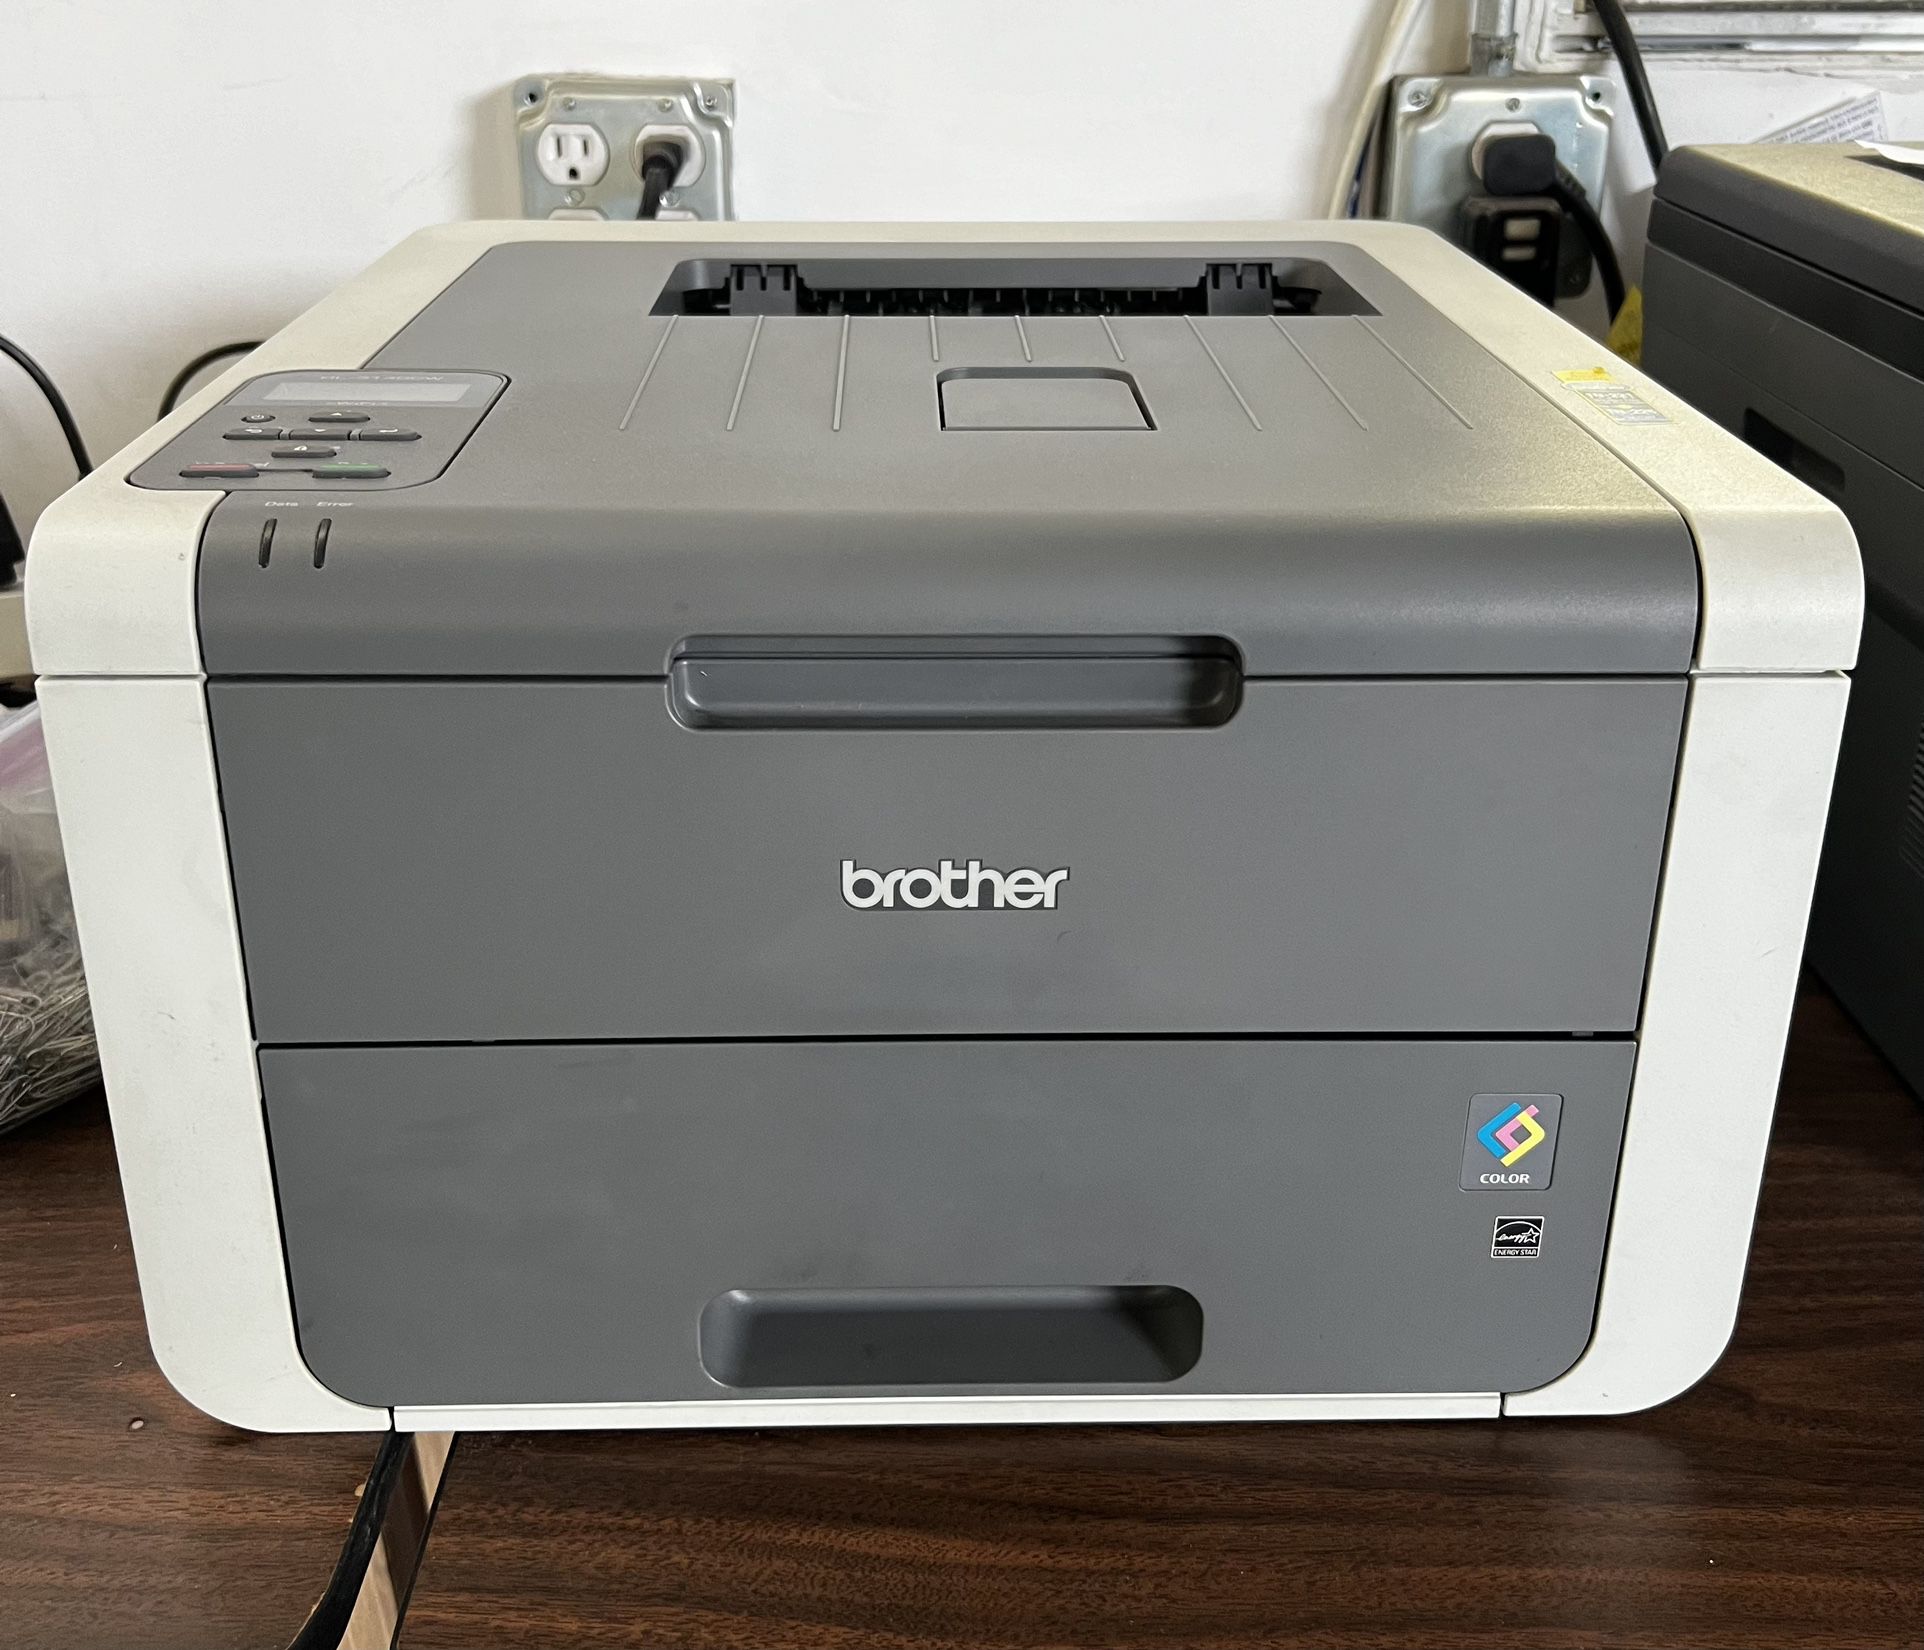 Brother Printer HL-3140 CW